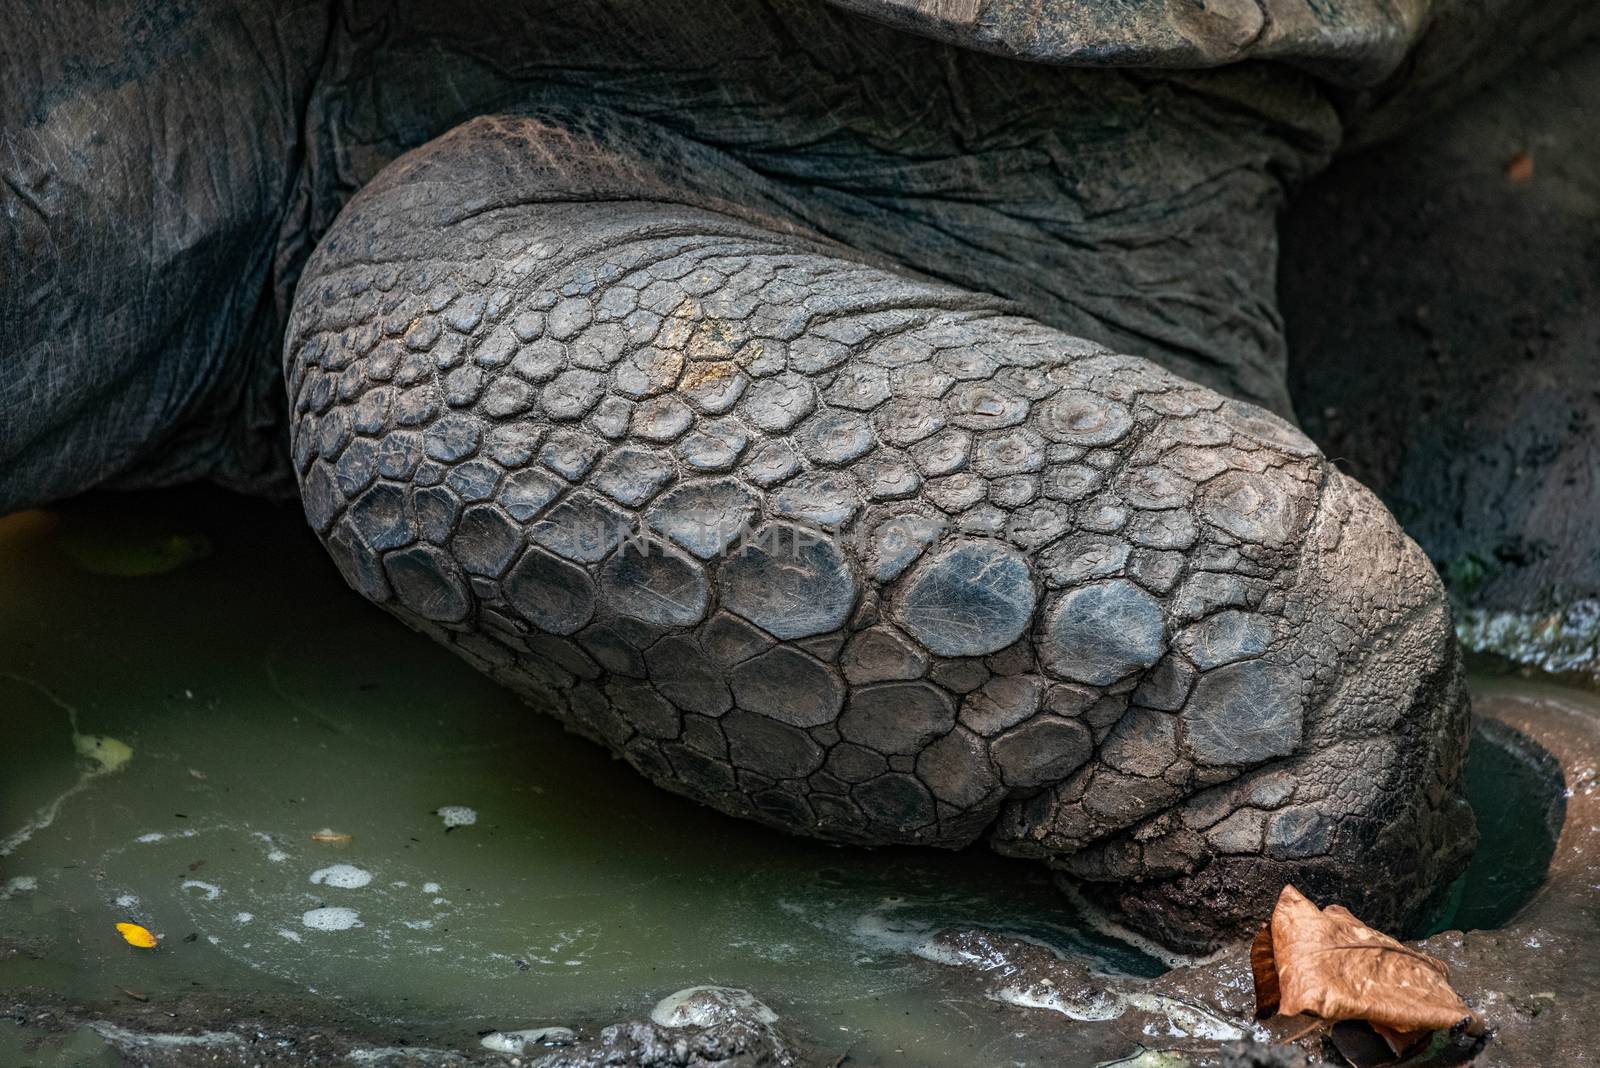 Aldabra Tortoise's scales on its leg.